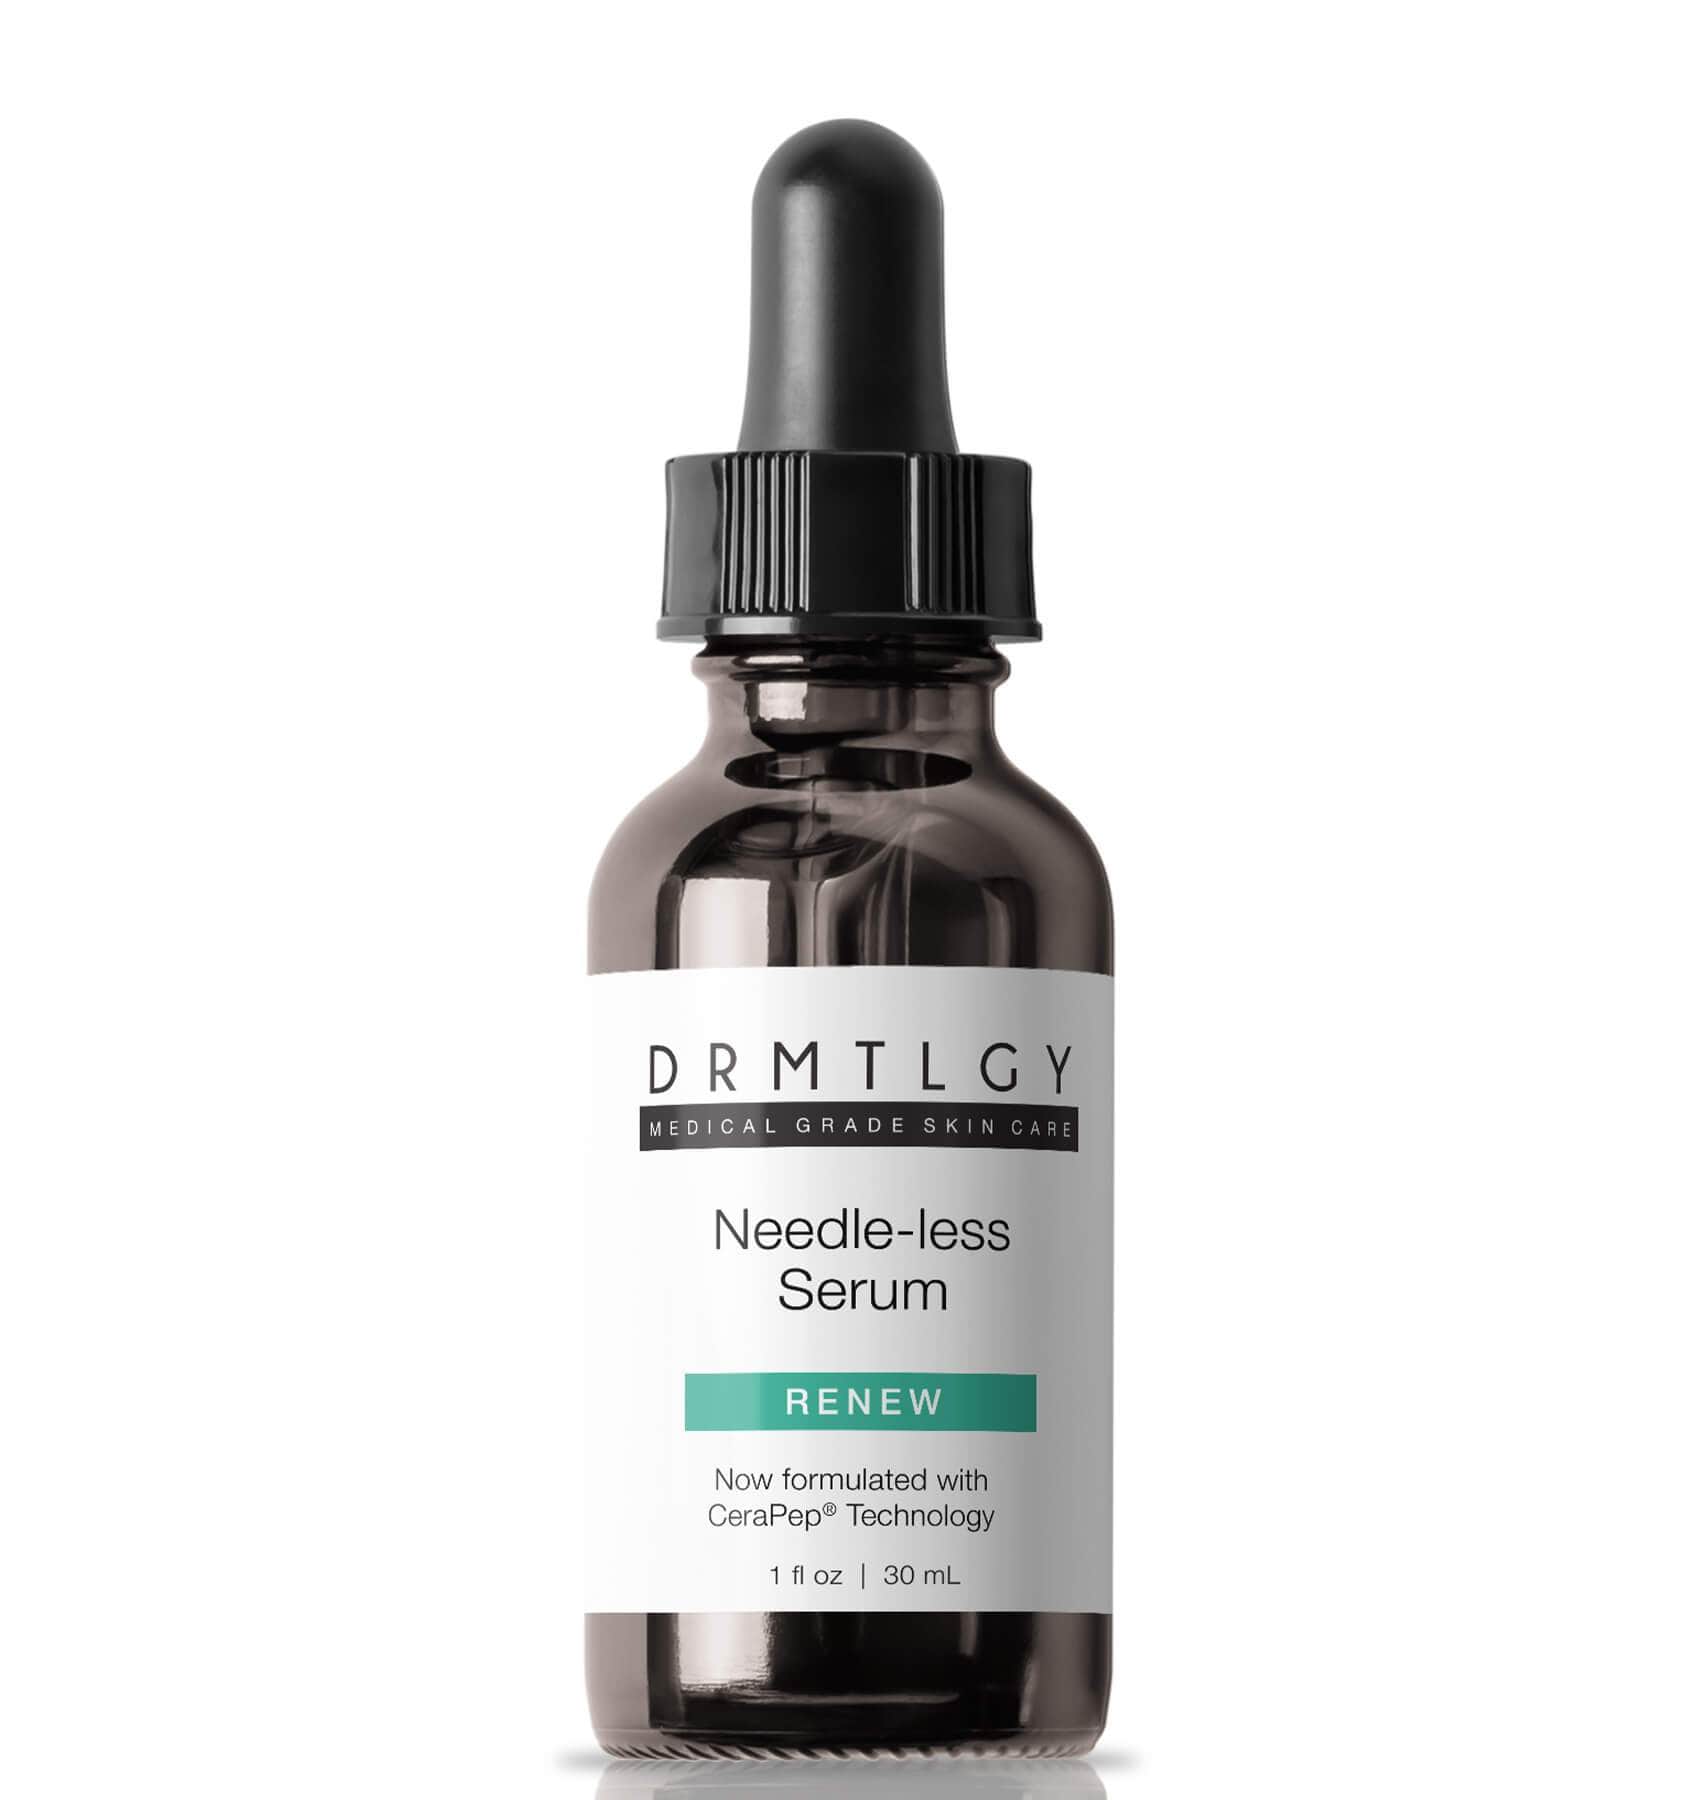 DRMTLGY - Needle-less Serum